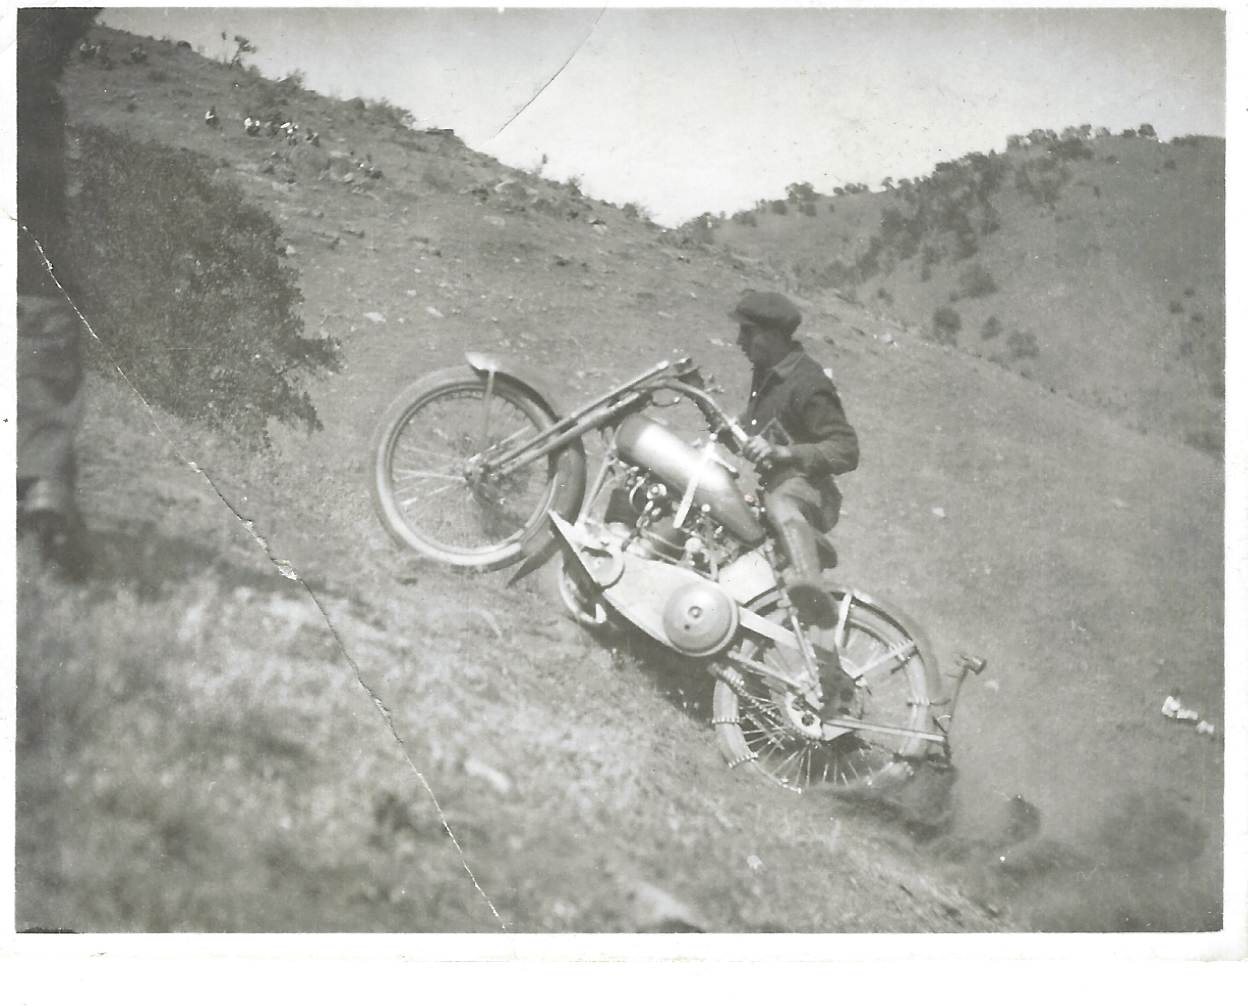 Bert Lundy racing his motorcycle.